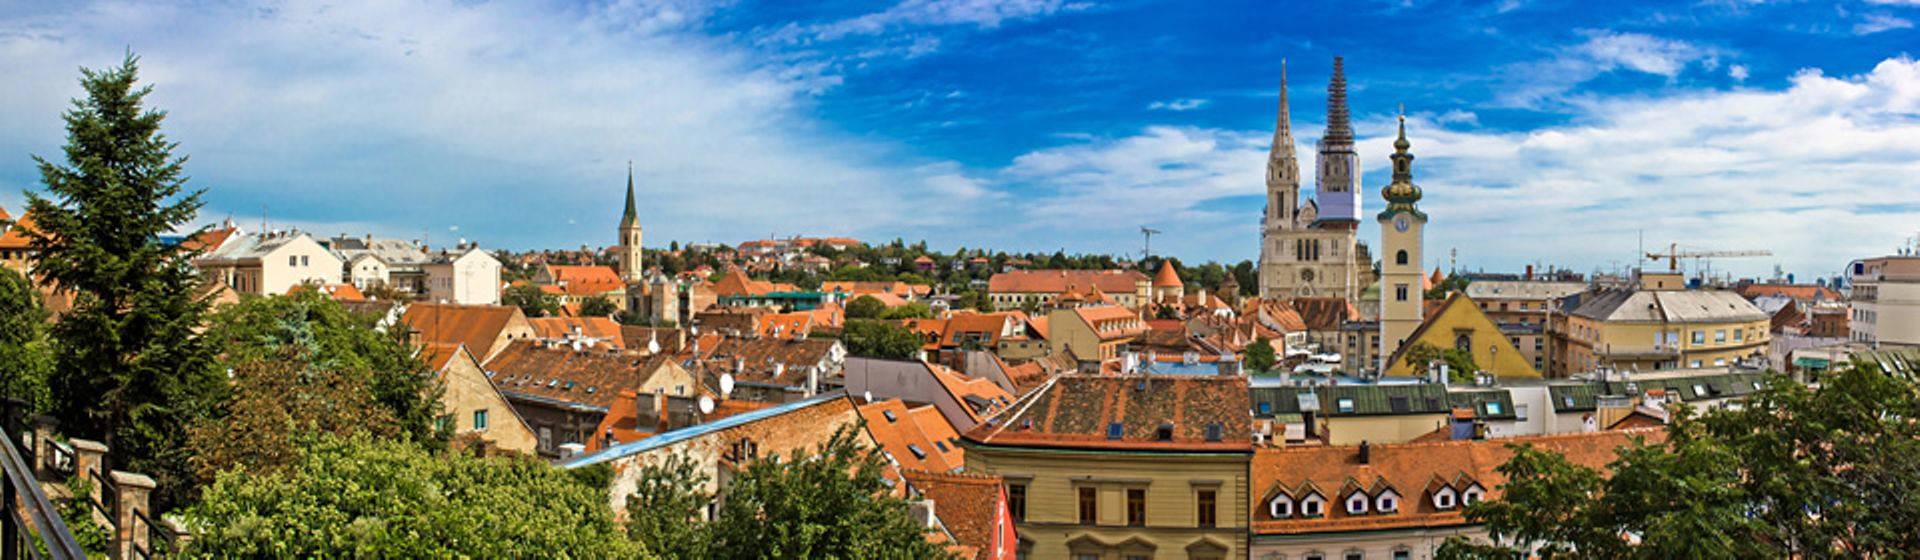 Holidays to Zagreb Image